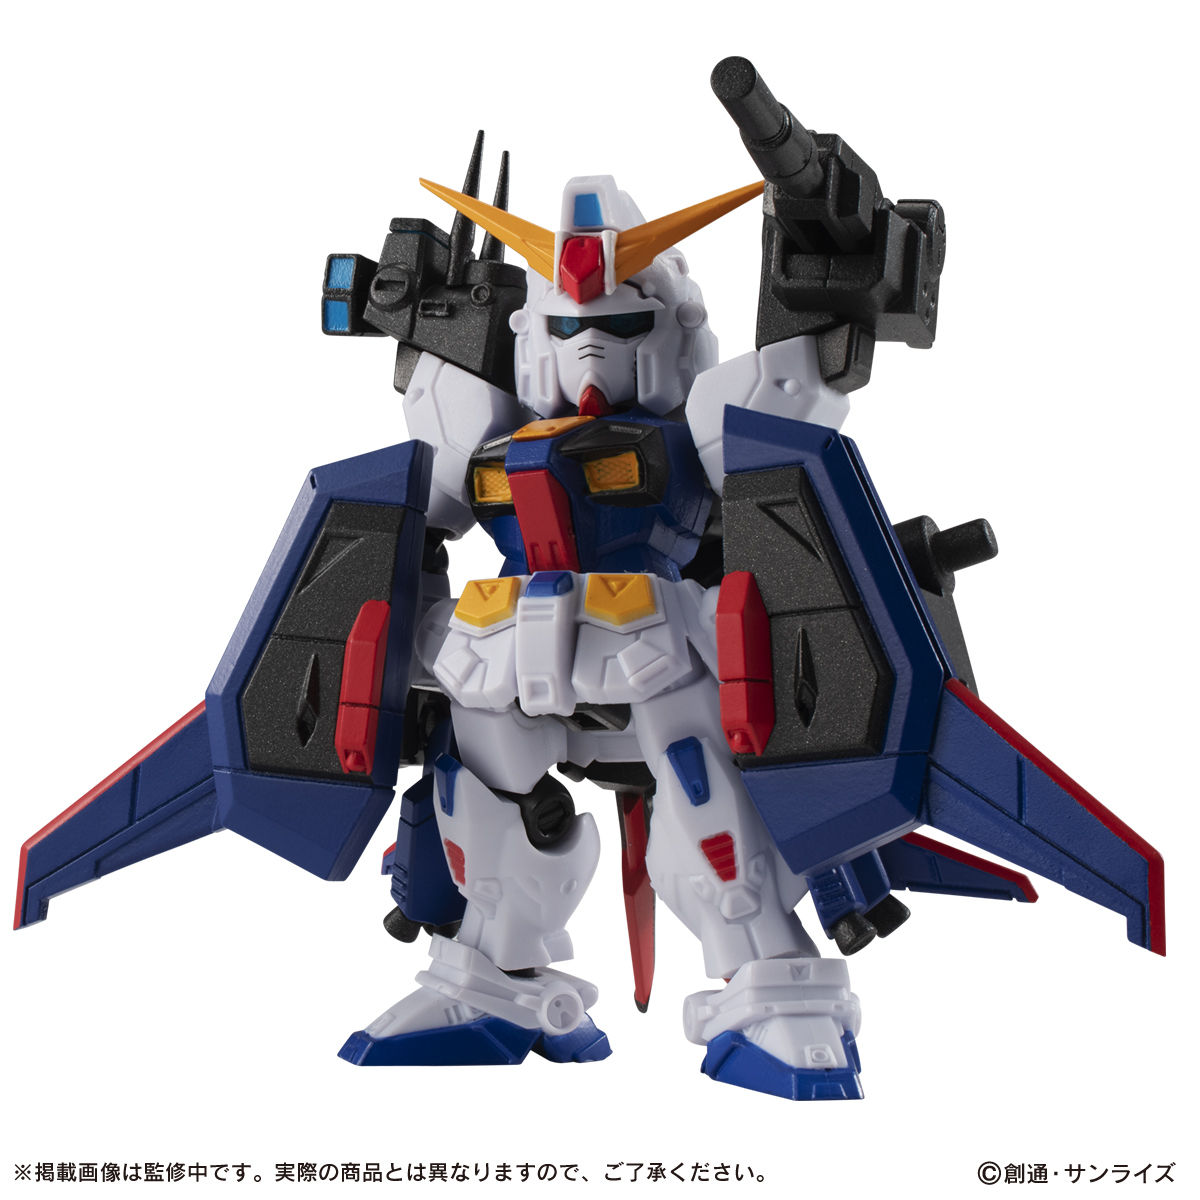 Gashapon Gundam Series: Gundam Mobile Suit Ensemble EX24 F90A Gundam F90 Assoult Type + F90P Plunge Type